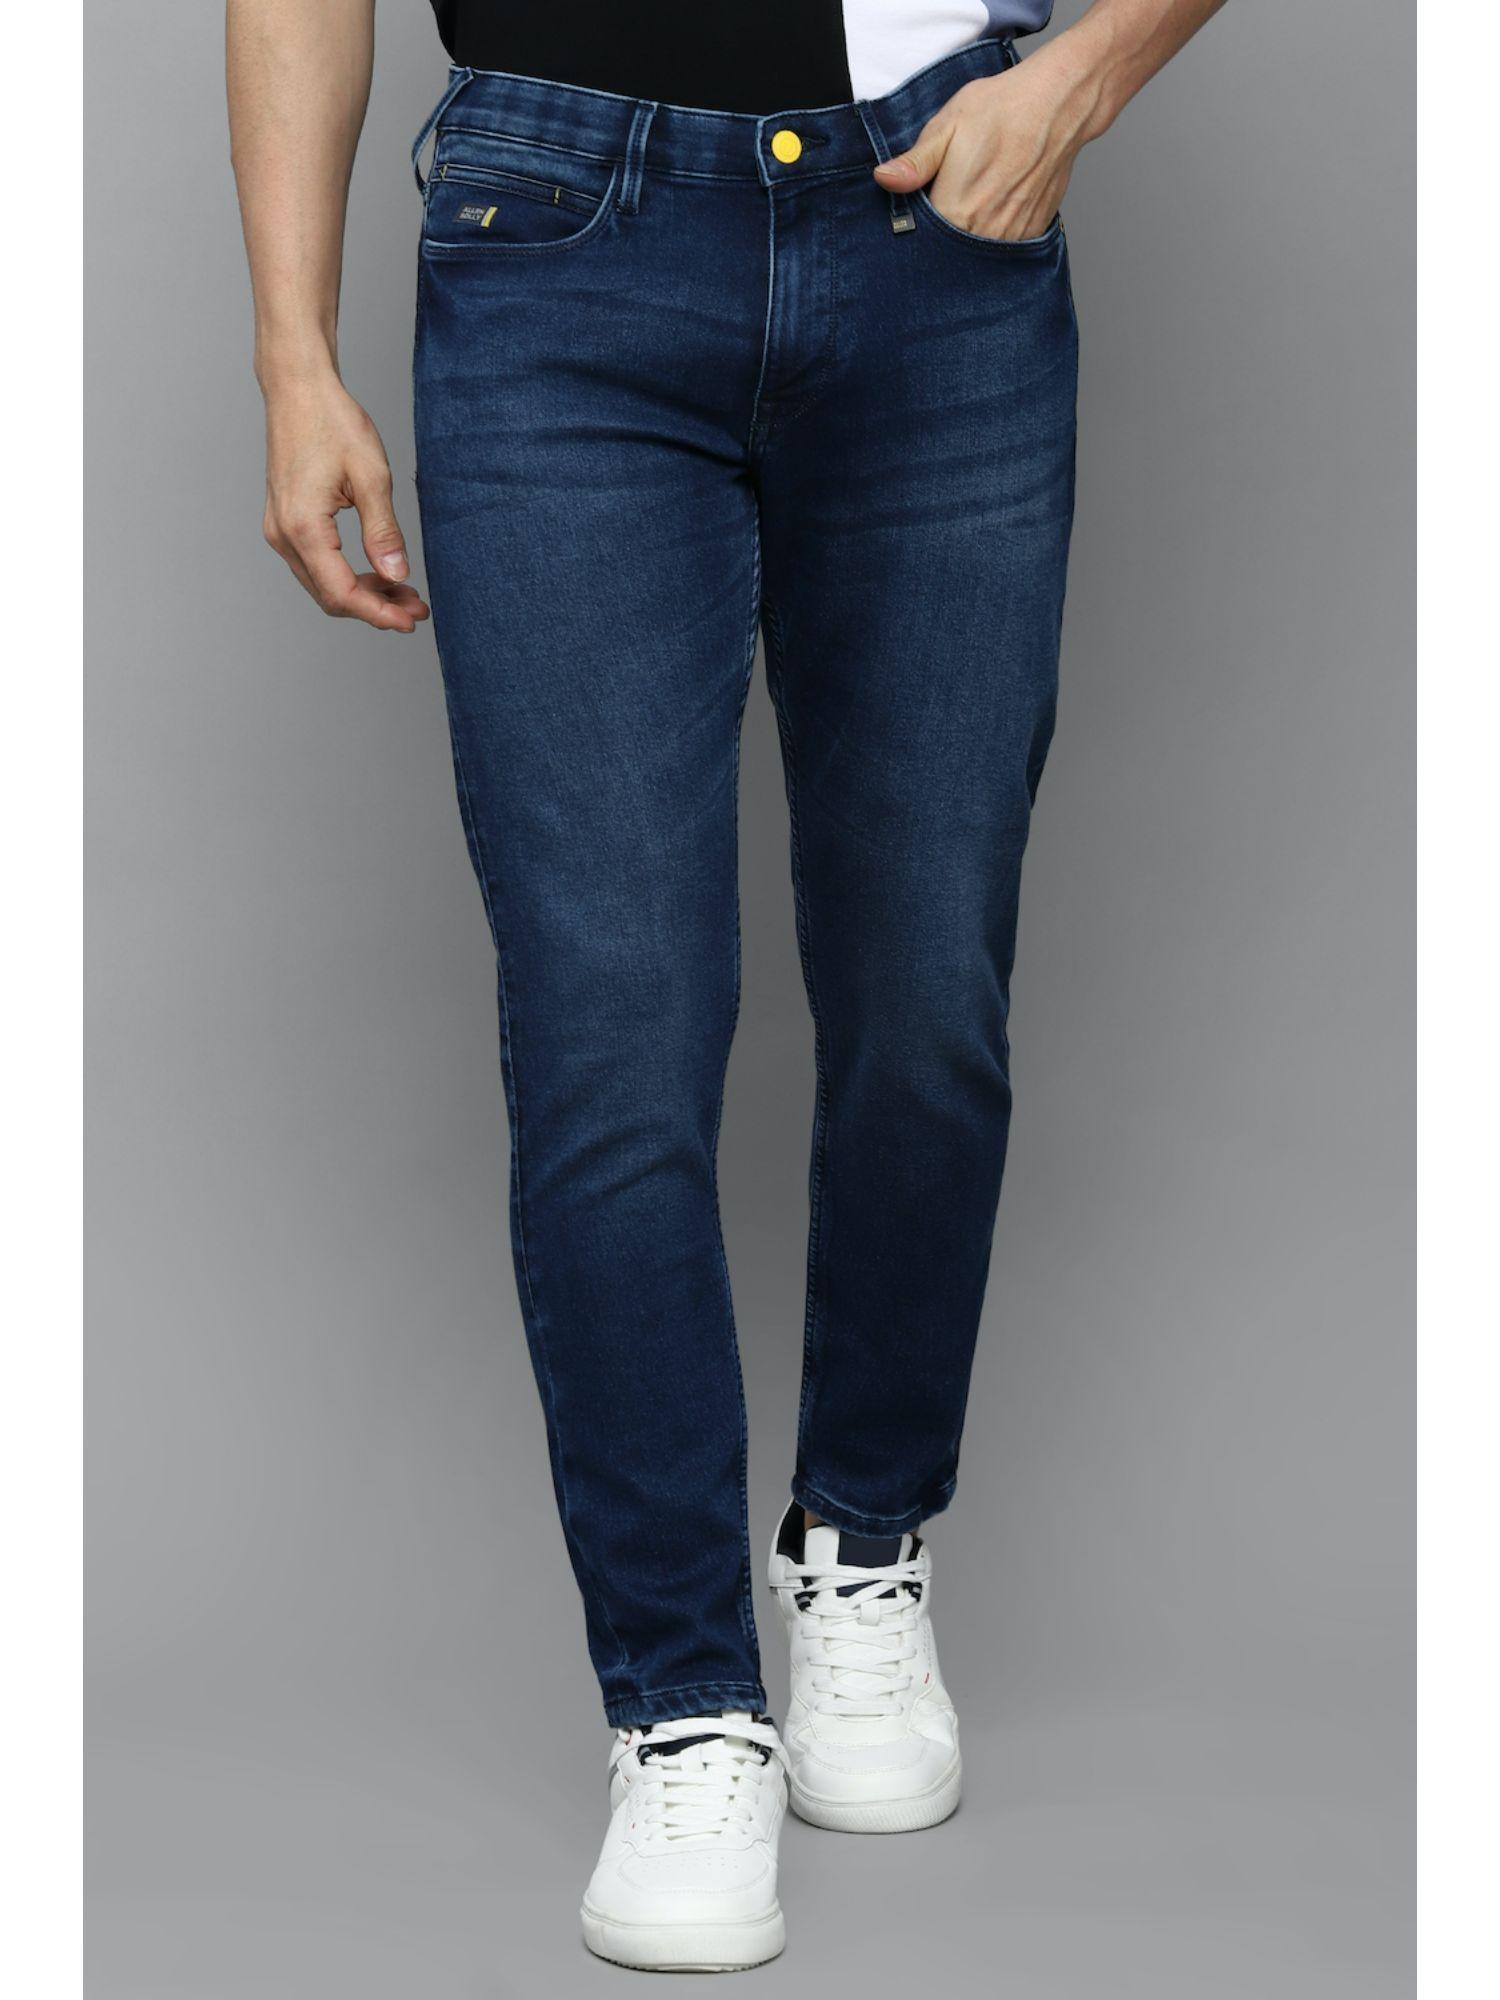 navy-jeans